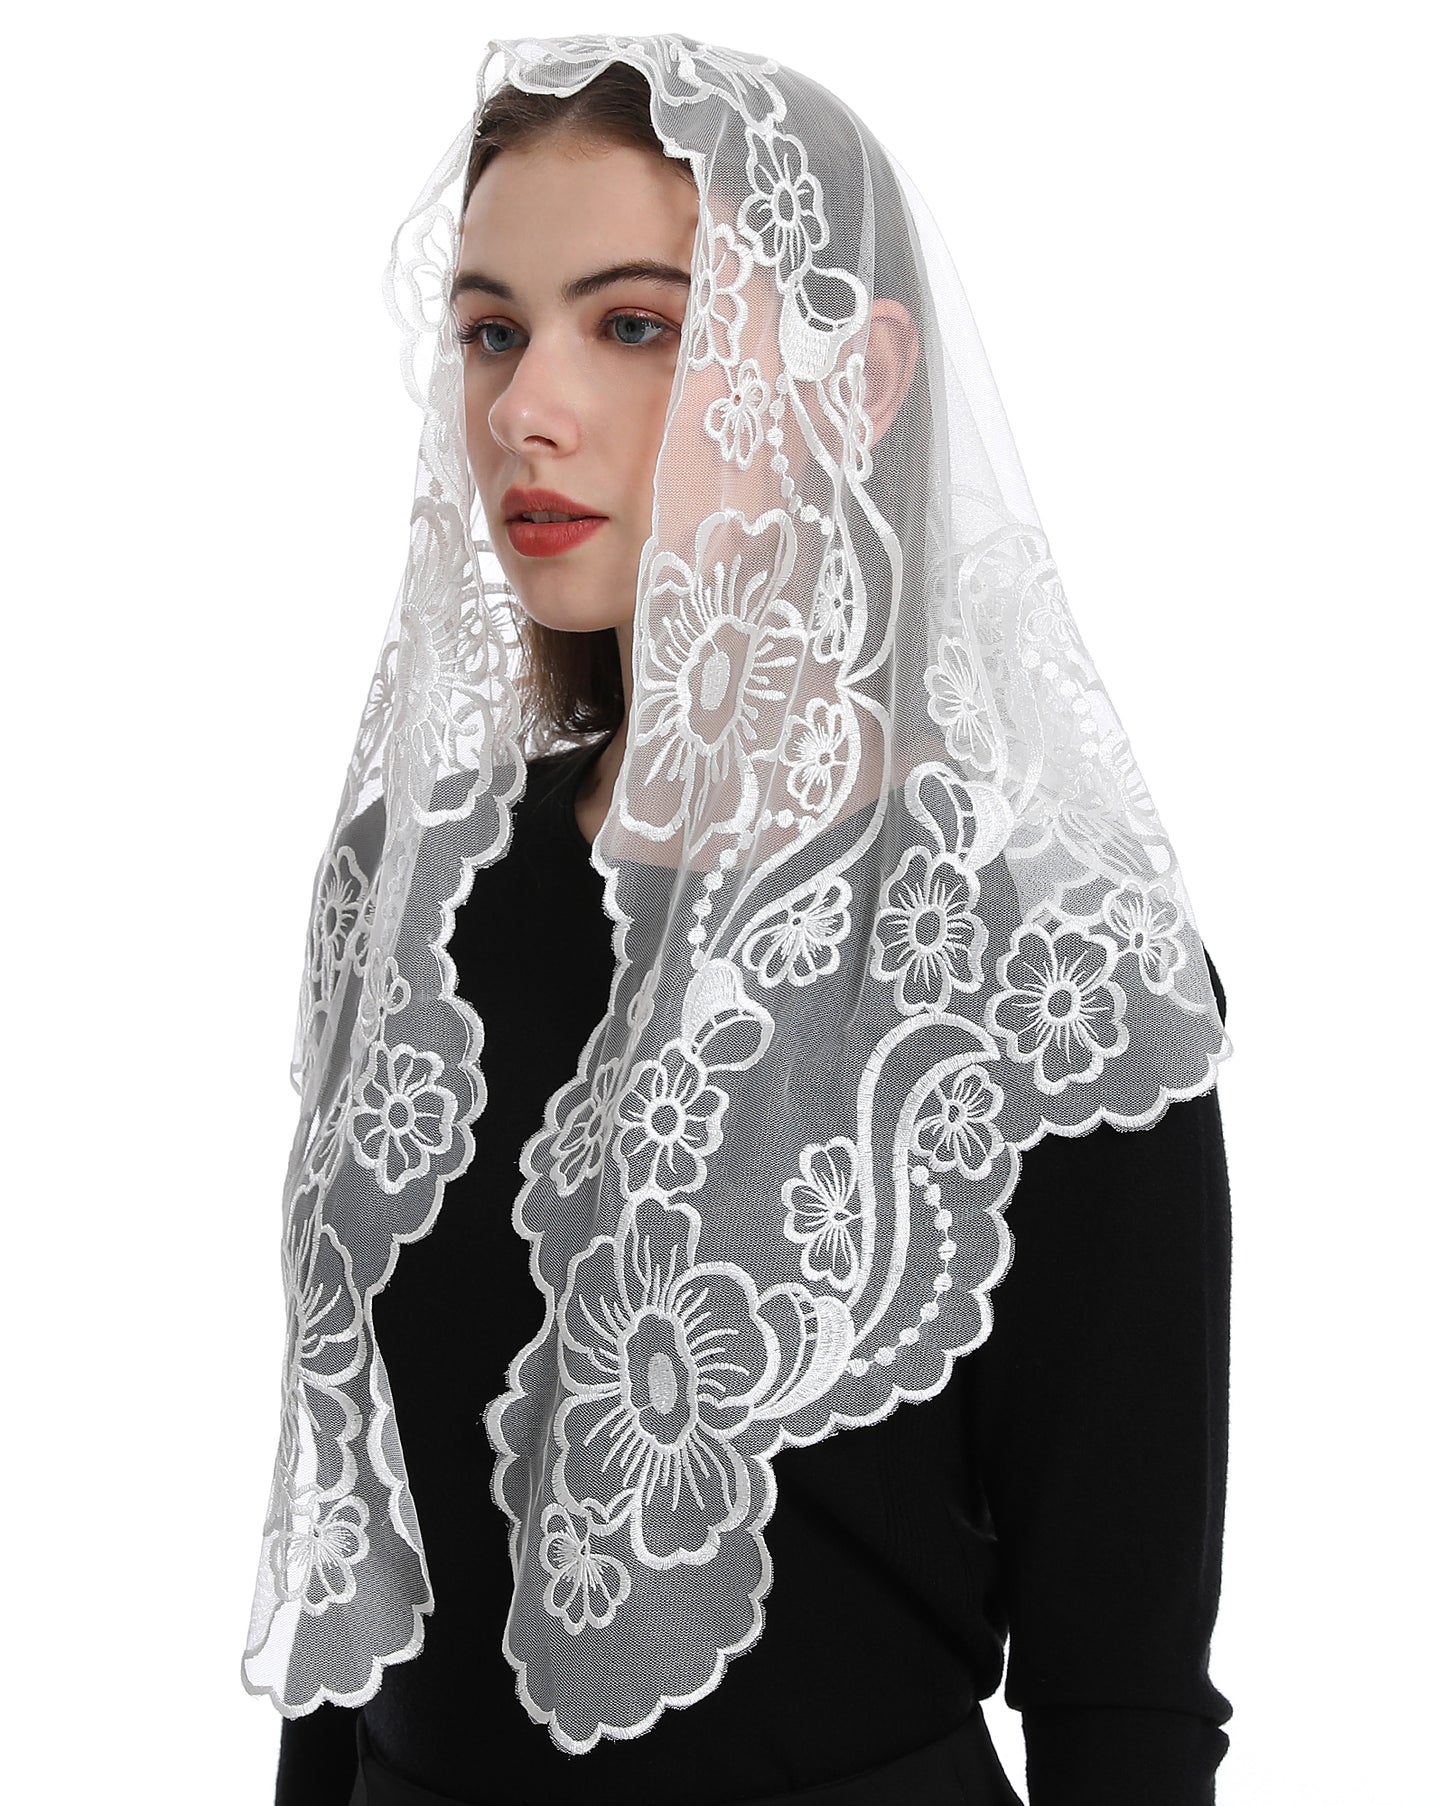 Bozidol Women's Spanish Style Catholic Mantilla Veils Vintaged Lace Scarf Shawl Church Mass Veil with Hairclips